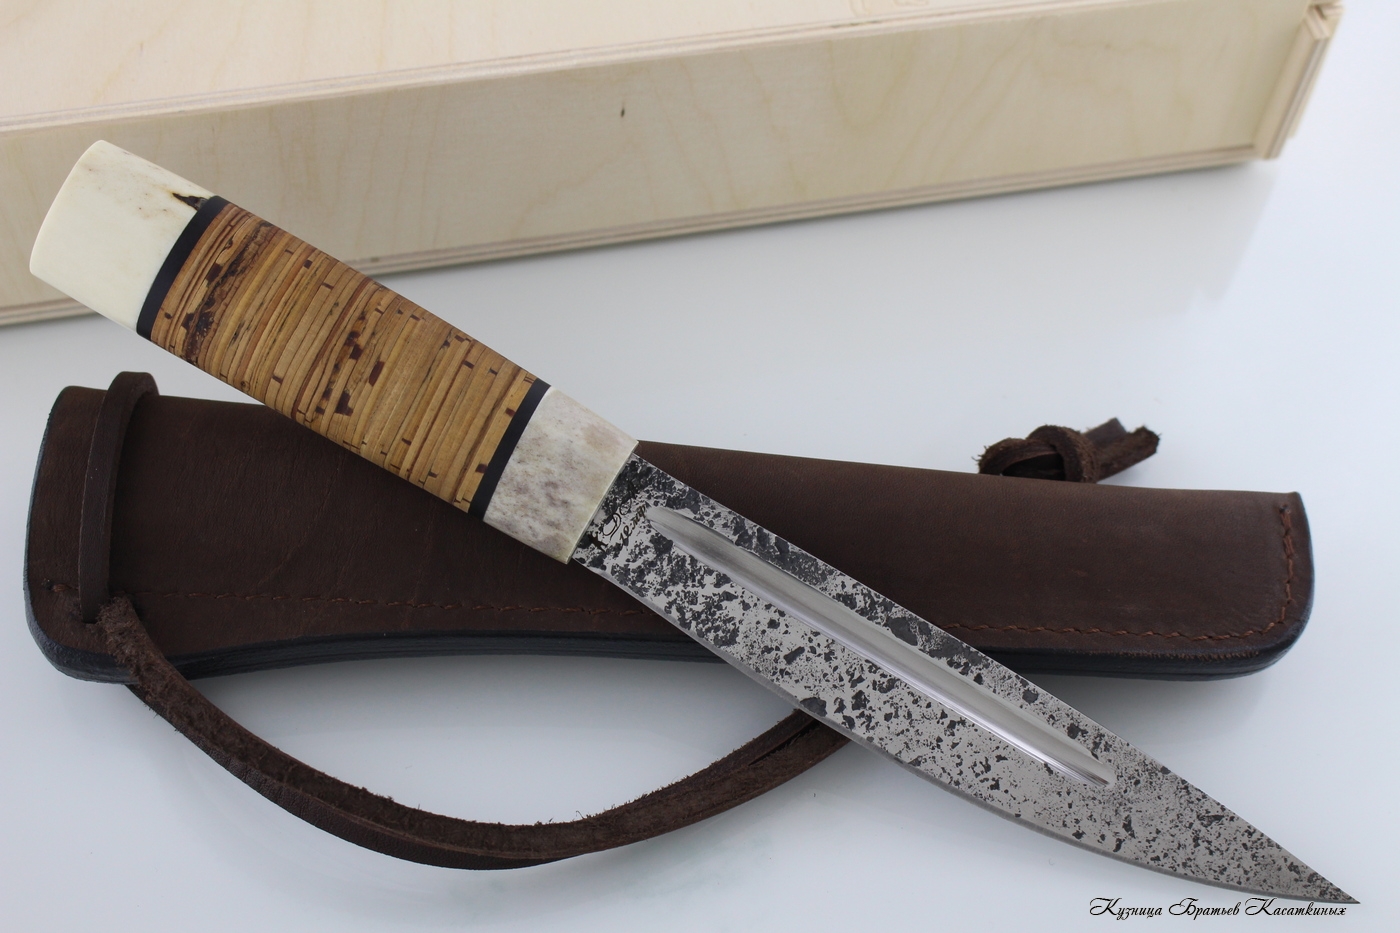 Yakutian knife (big size). Stainless Steel 95h18. Birchbark handle